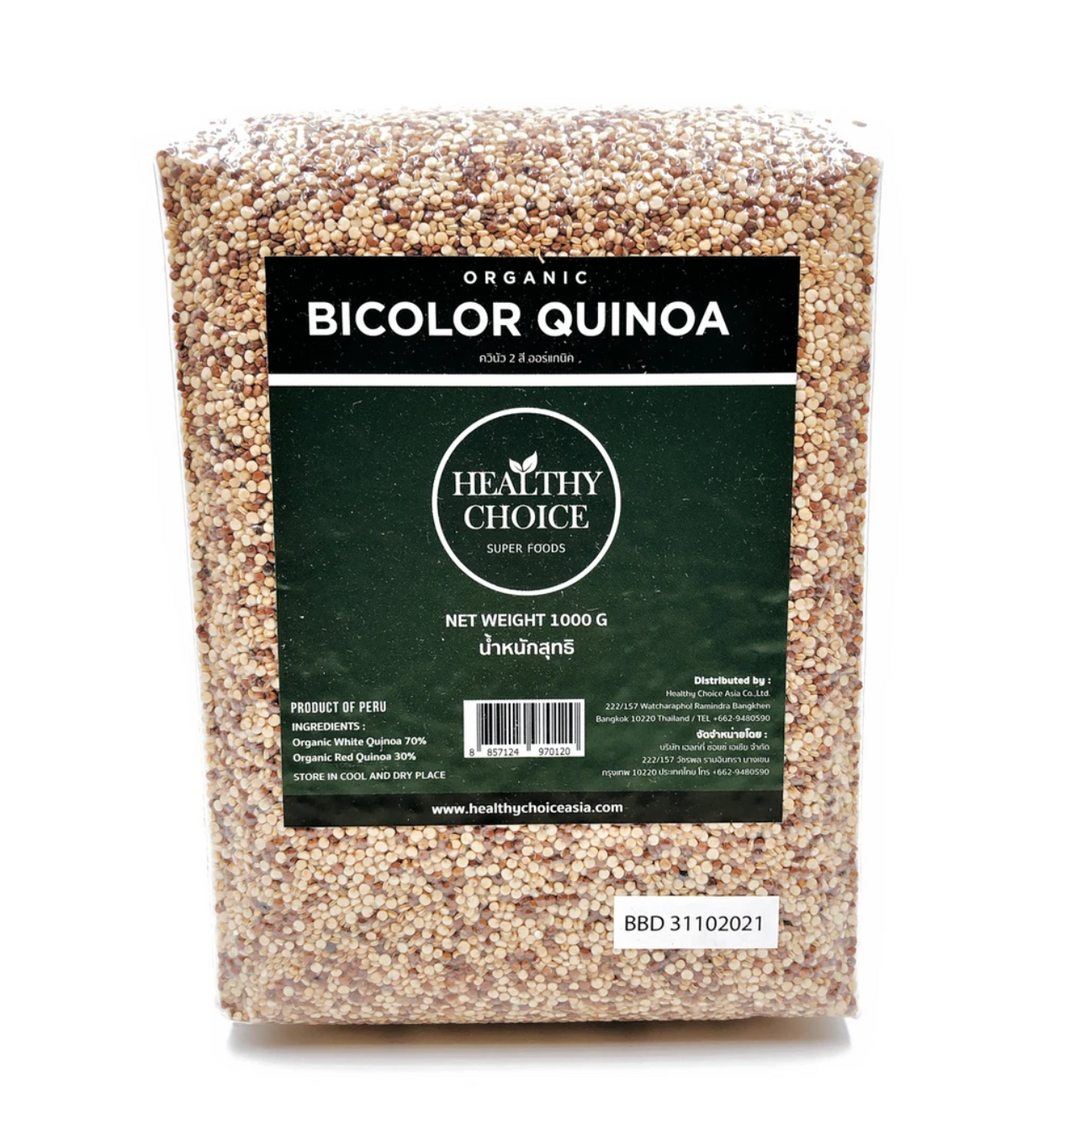 Healthy Choice Organic Bicolor Quinoa